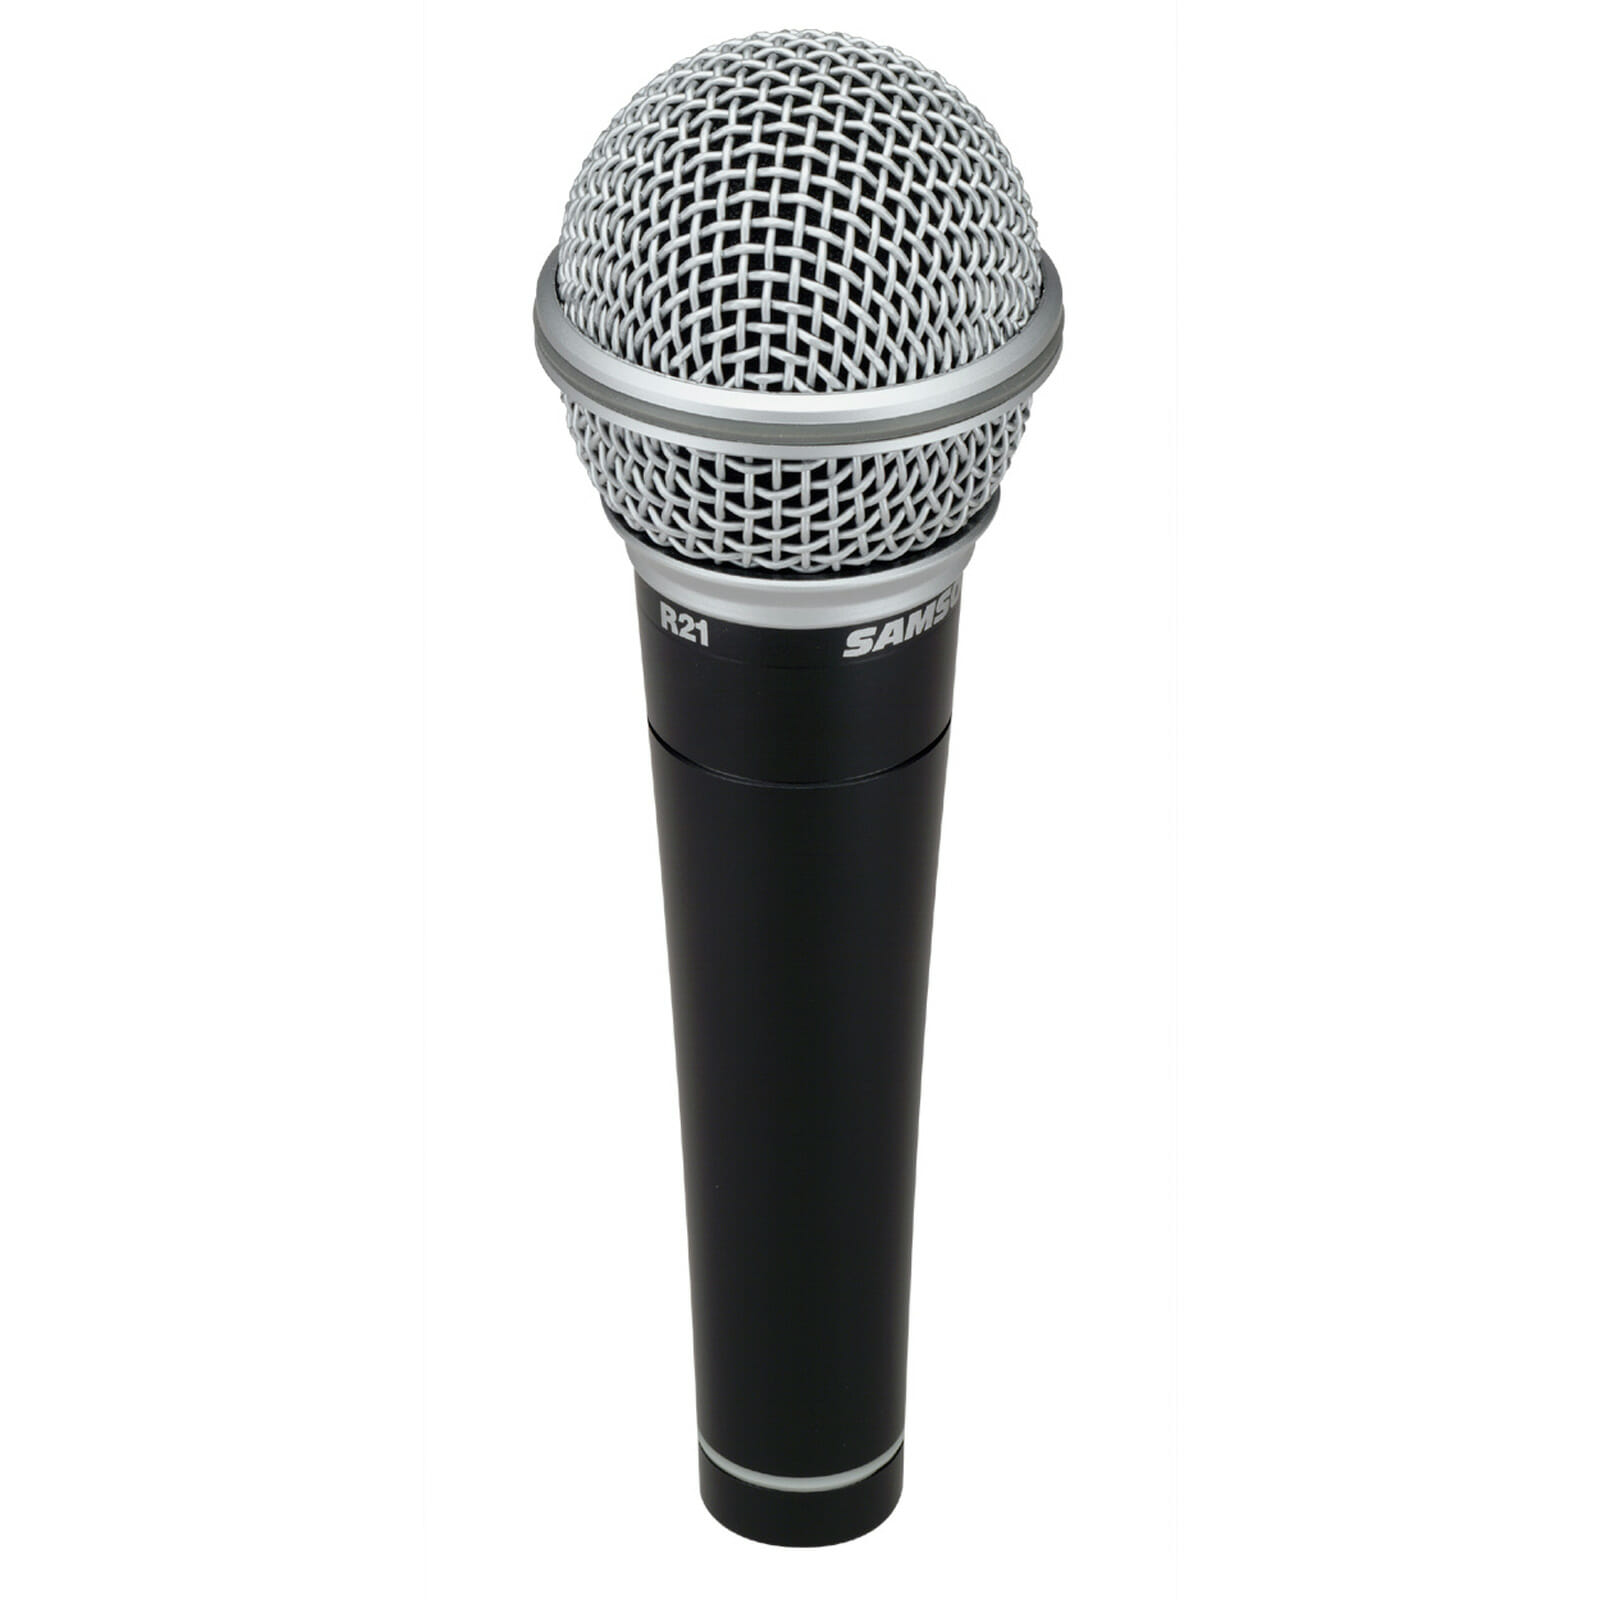 Samson R21 Handheld Dynamic Vocal Microphone 3-Pack 